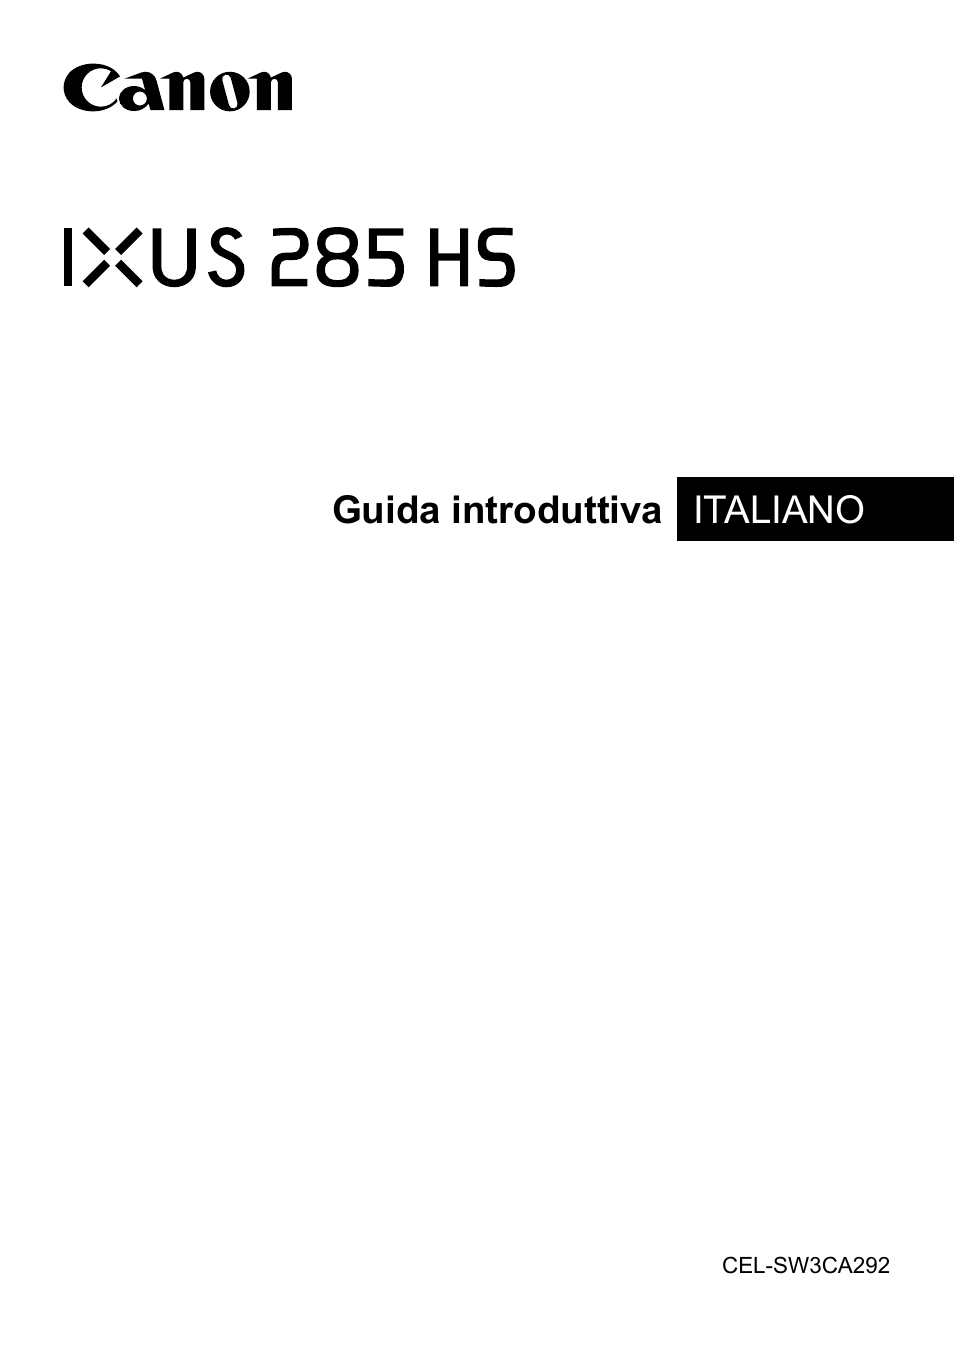 Canon IXUS 285 HS Manuale d'uso | Pagine: 11